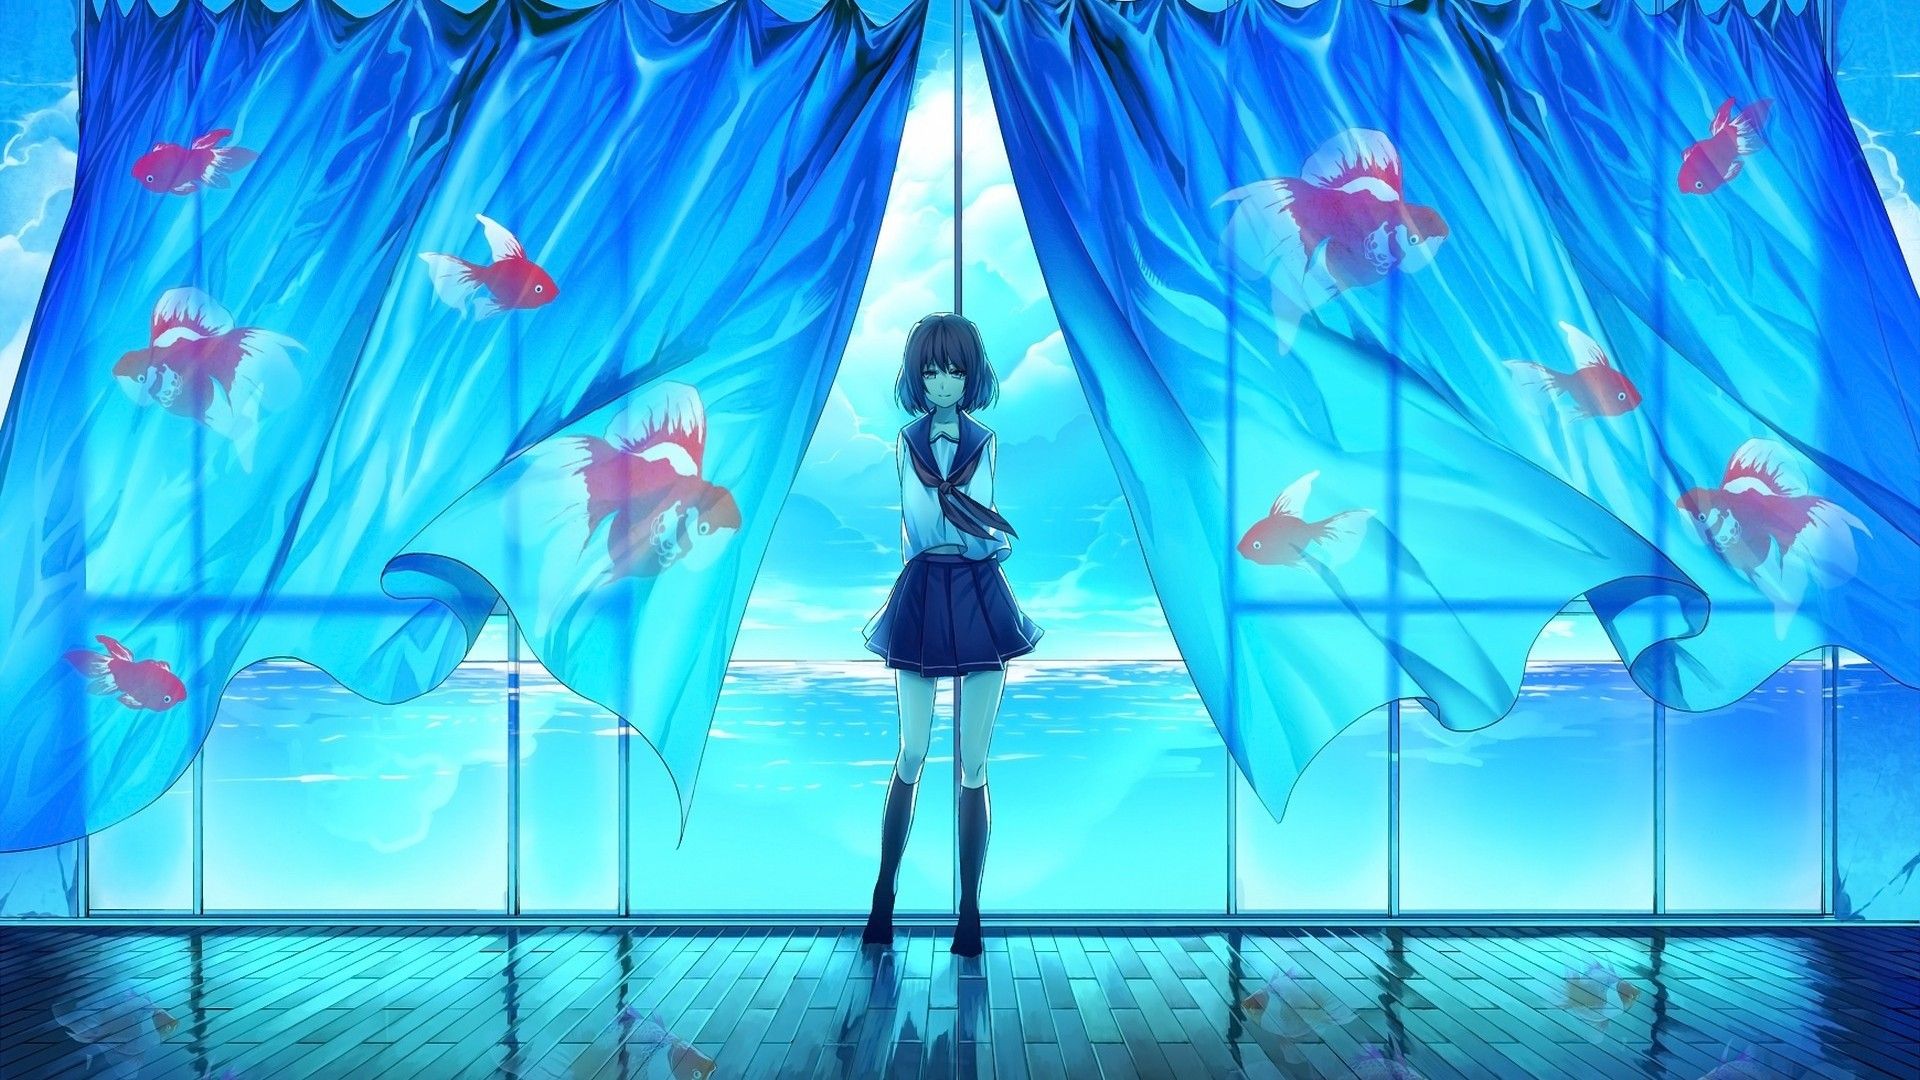 fish, school uniforms, curtains, anime girls, sea, upscaled